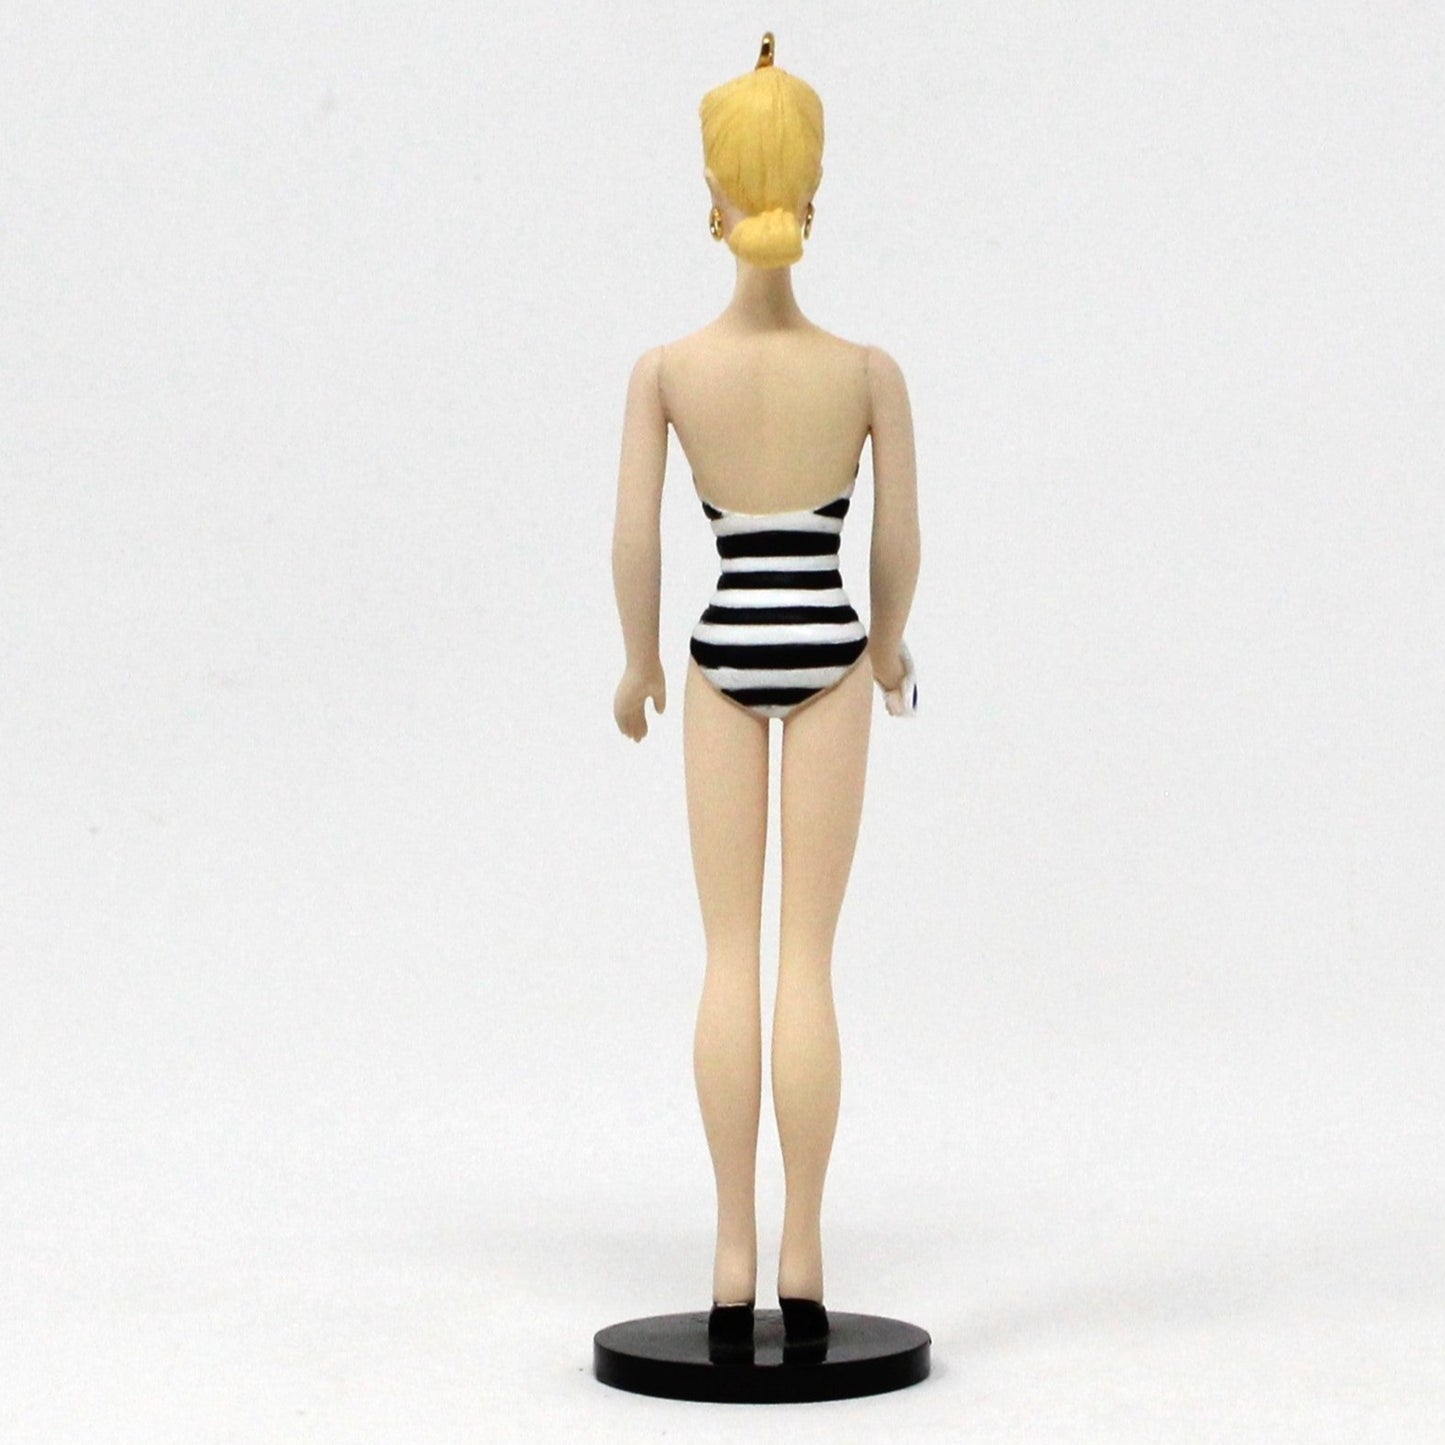 Ornament, Hallmark Keepsake, Barbie Debut 1959, Mattel 1994, In Box, Vintage